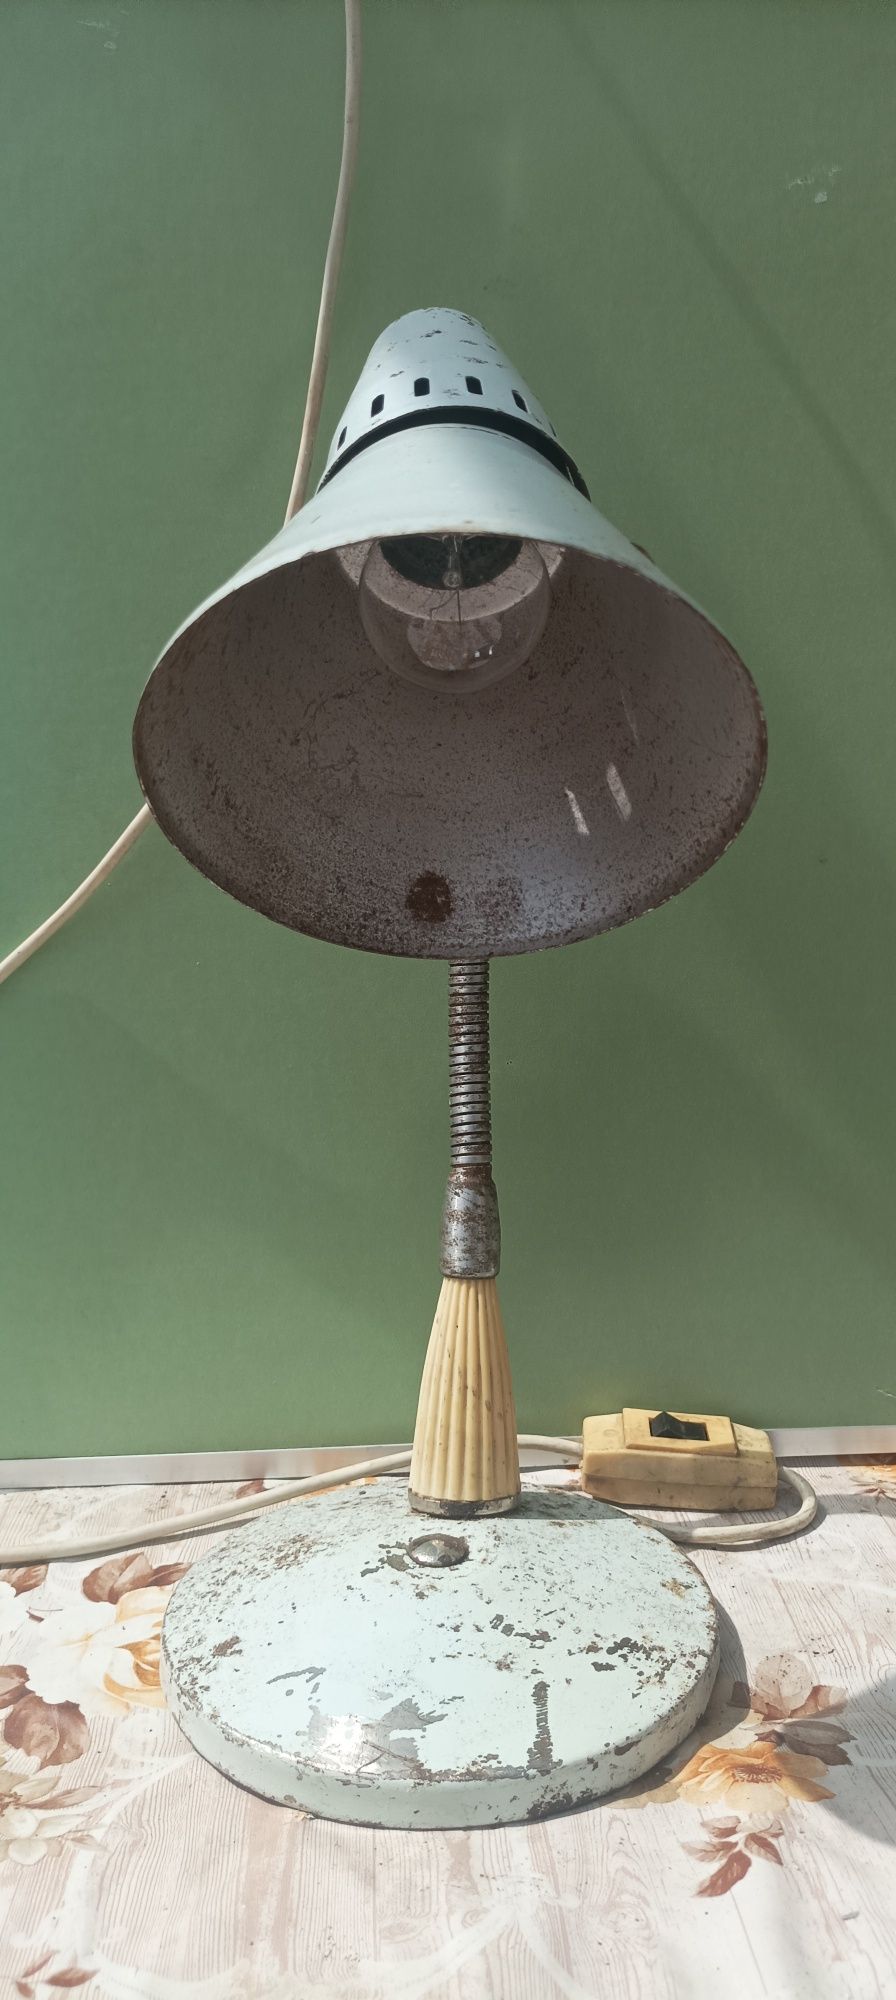 Стара работеща индустриална работна лампа.